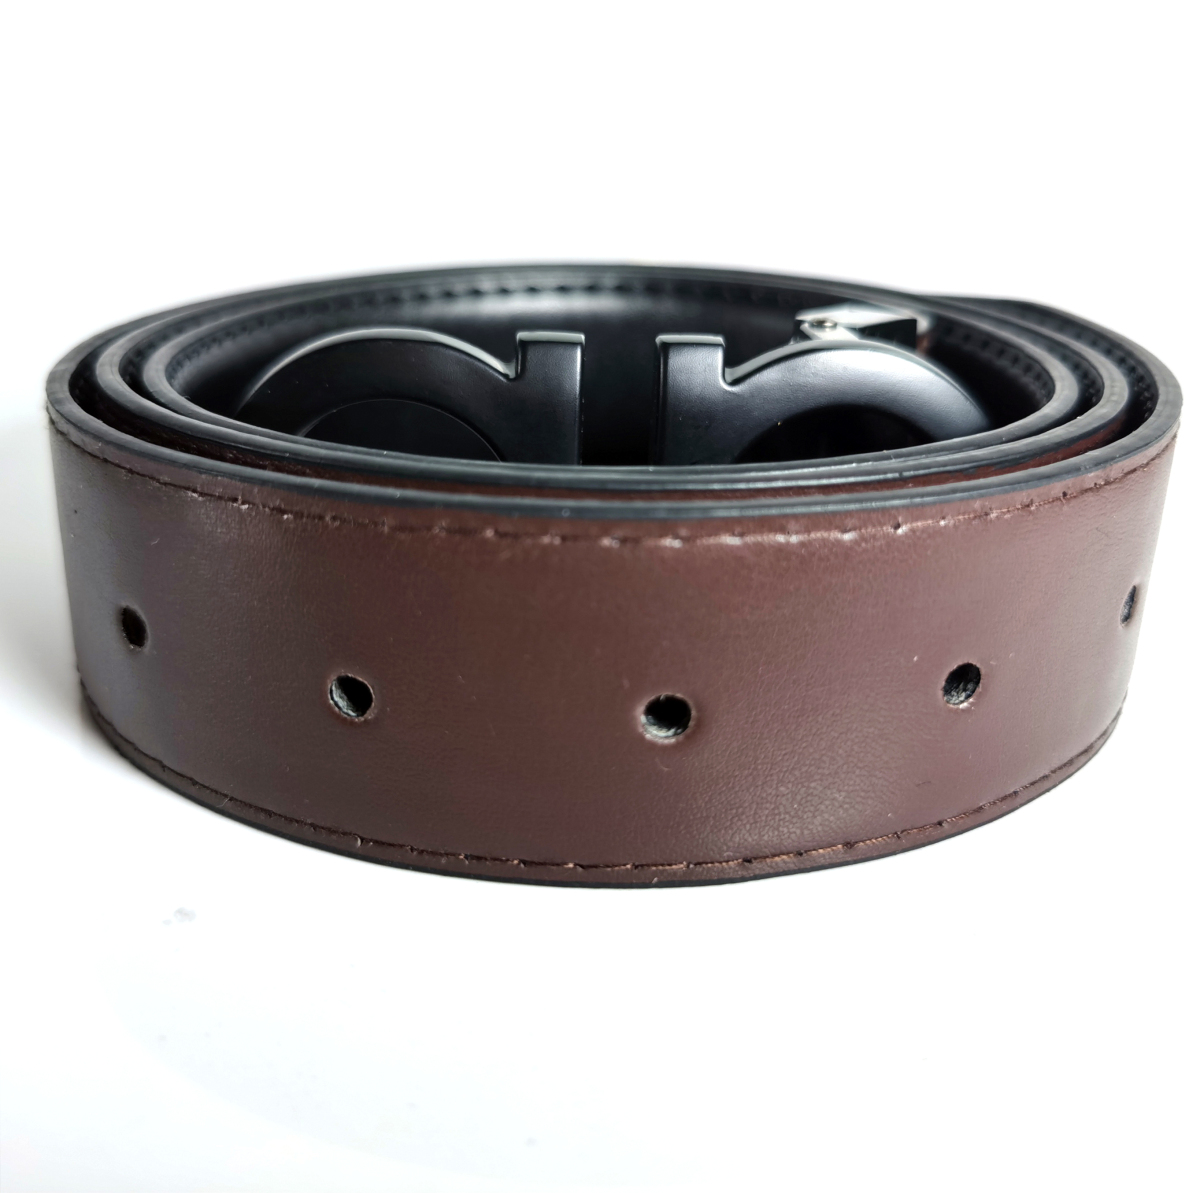 Cintura in pelle da uomo Cinture di design reversibili lisce nere e marroni Cintura larga 3,5 cm217G